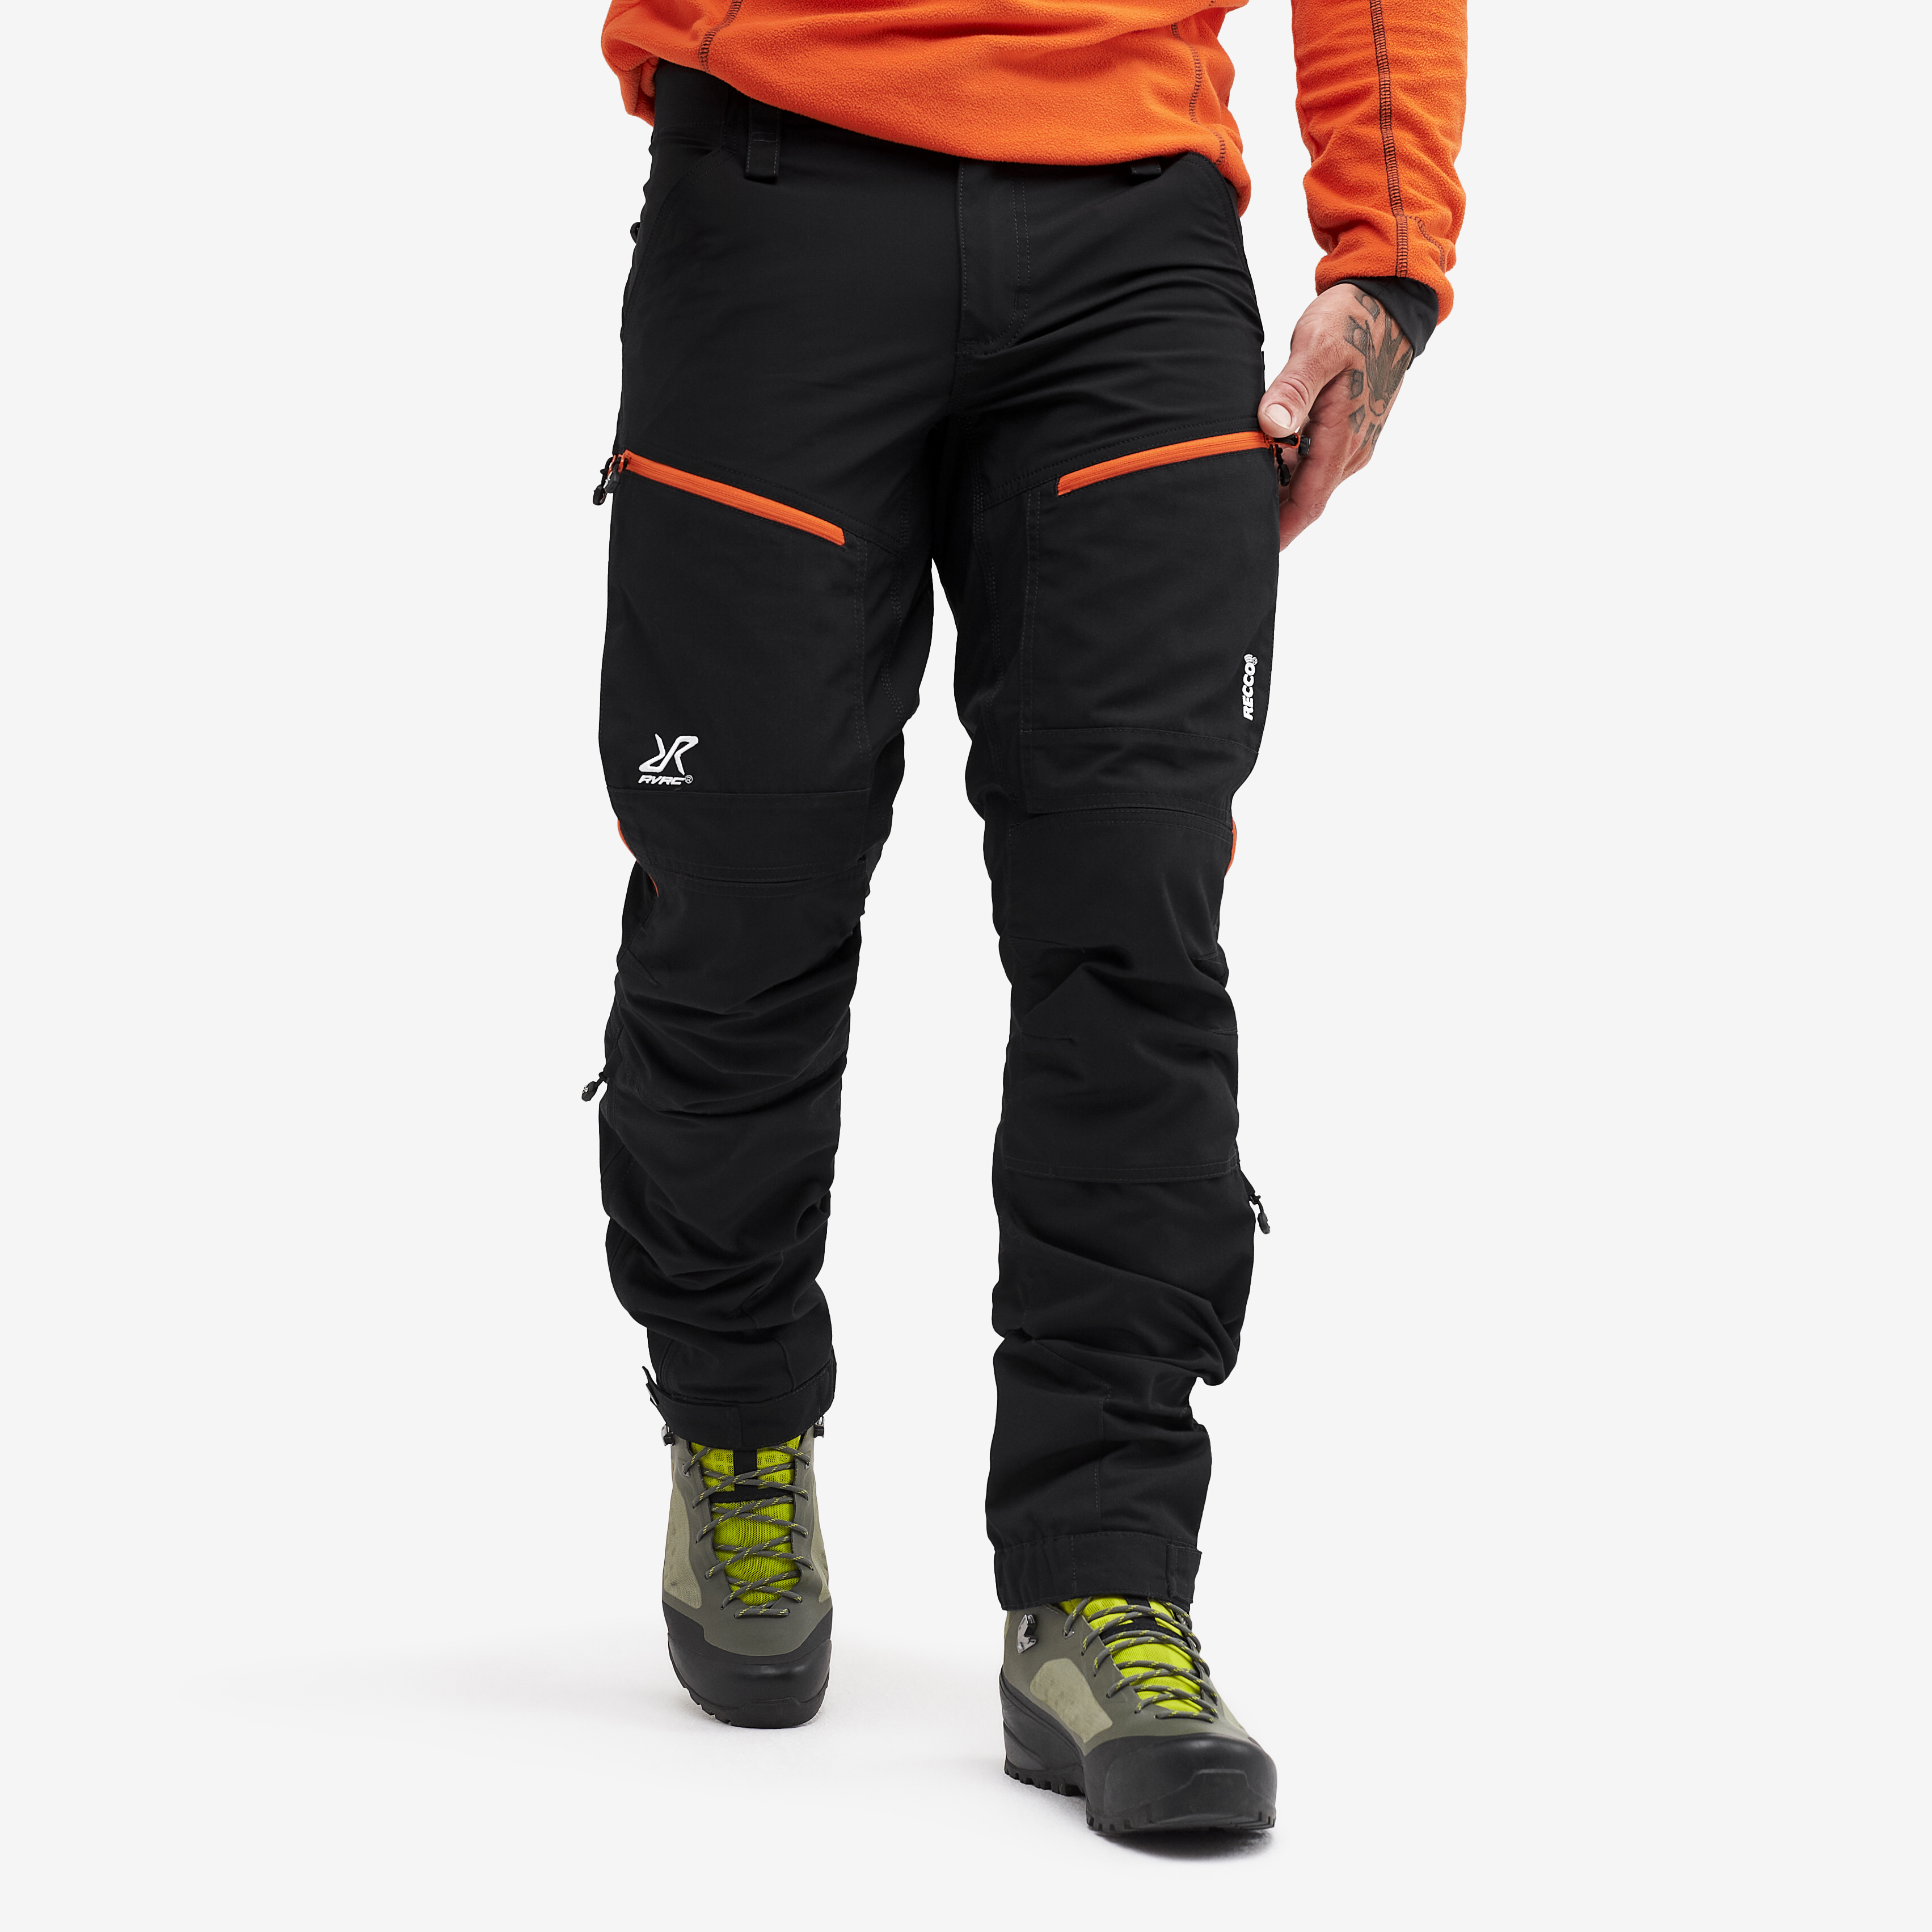 RVRC GP Pro Rescue Pants Black/Orange 2.0 Herr